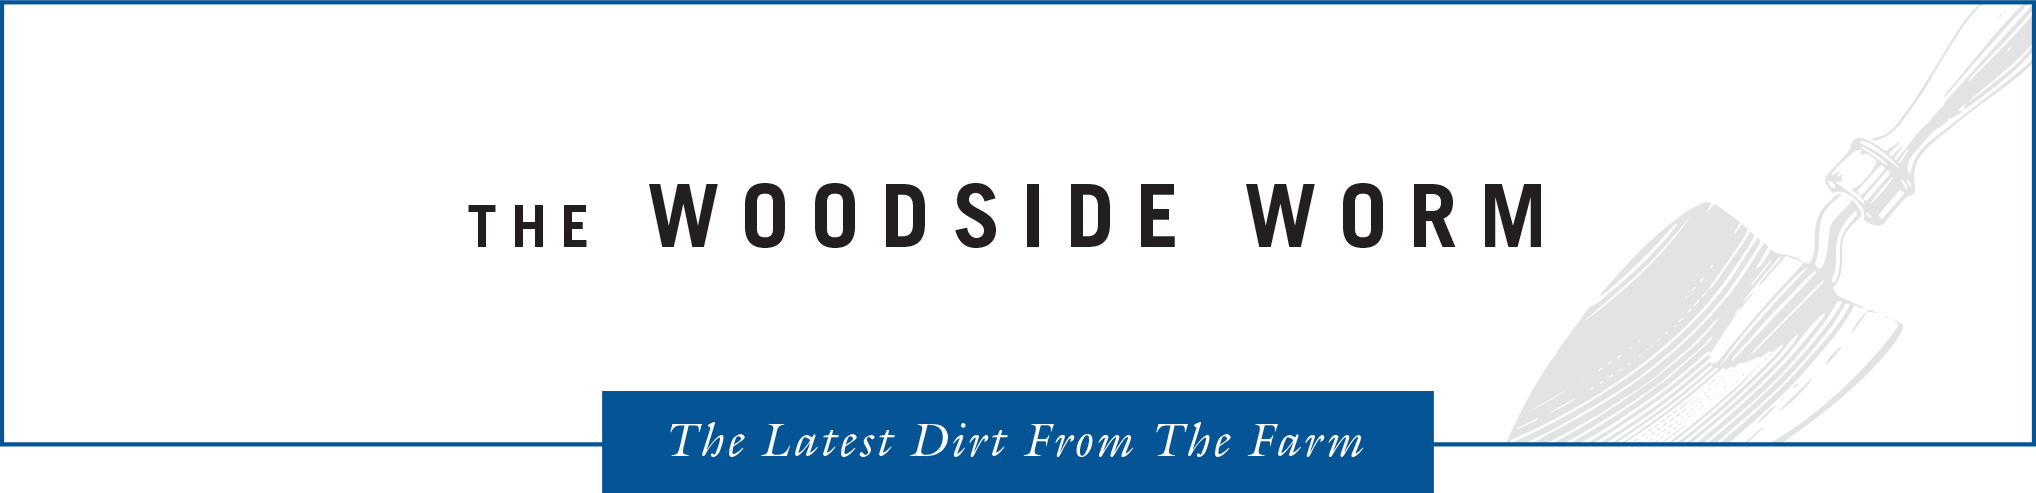 The Woodside Worm